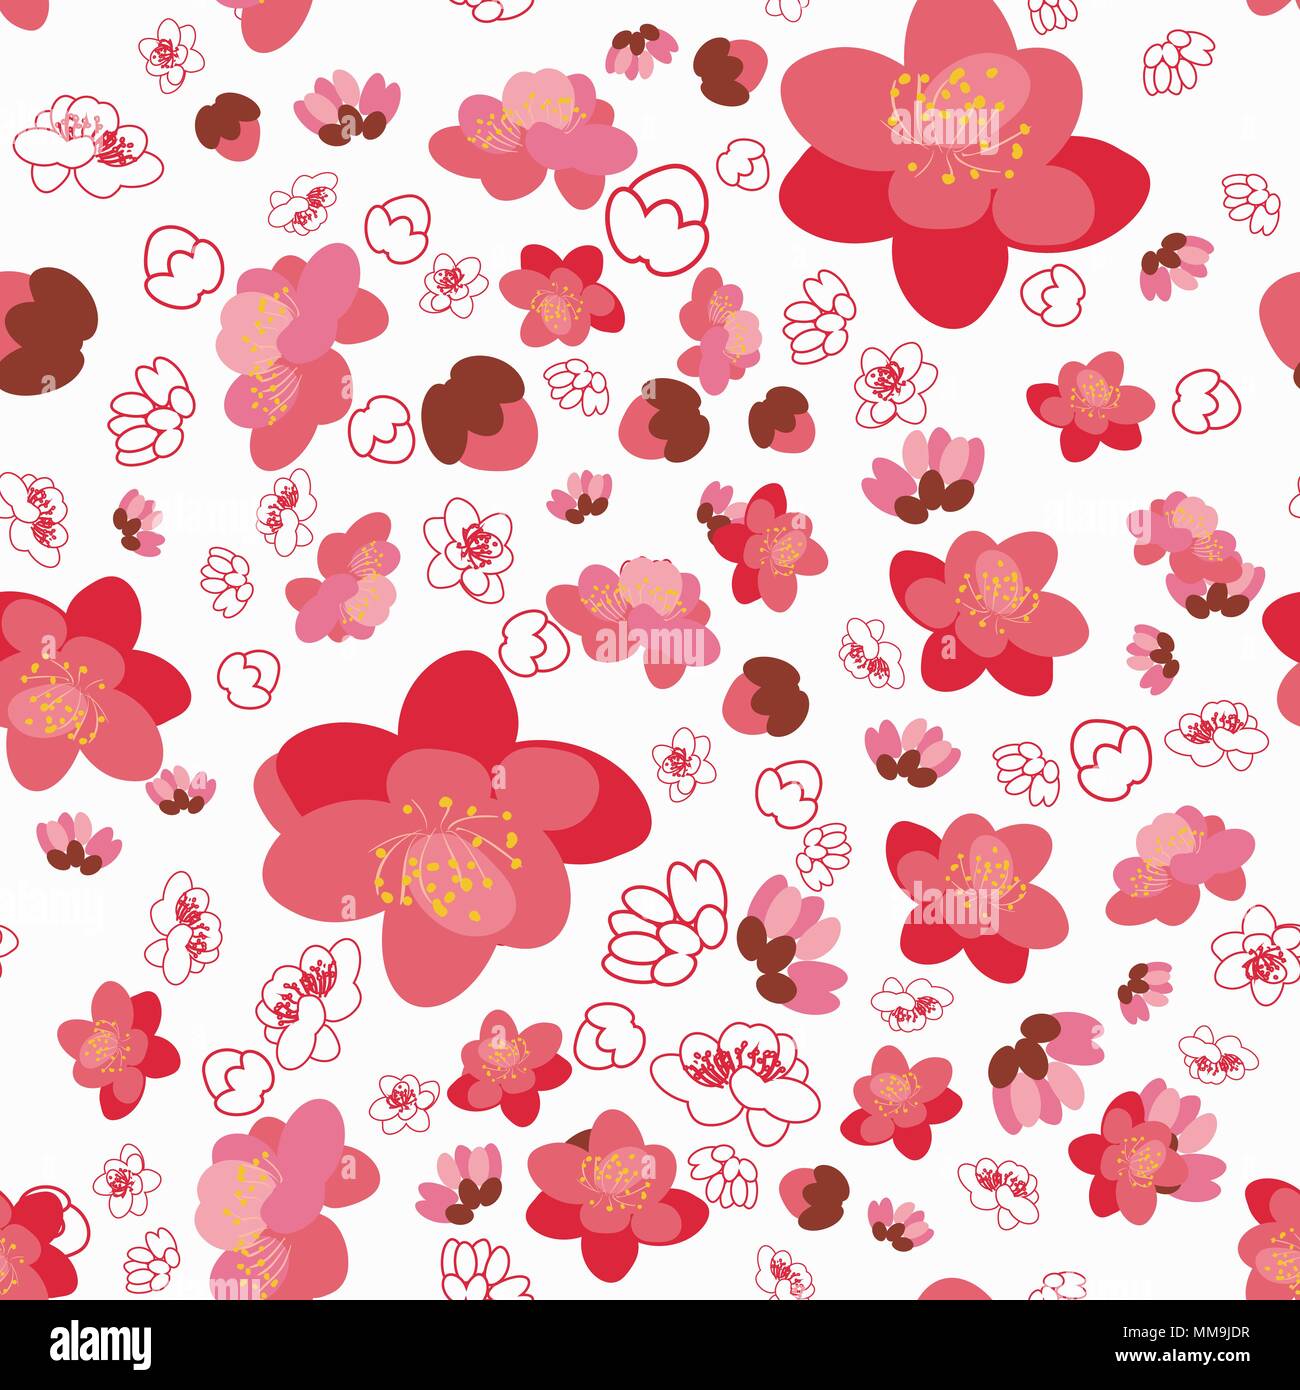 Download 420 Koleksi Background Bunga Flower Terbaik